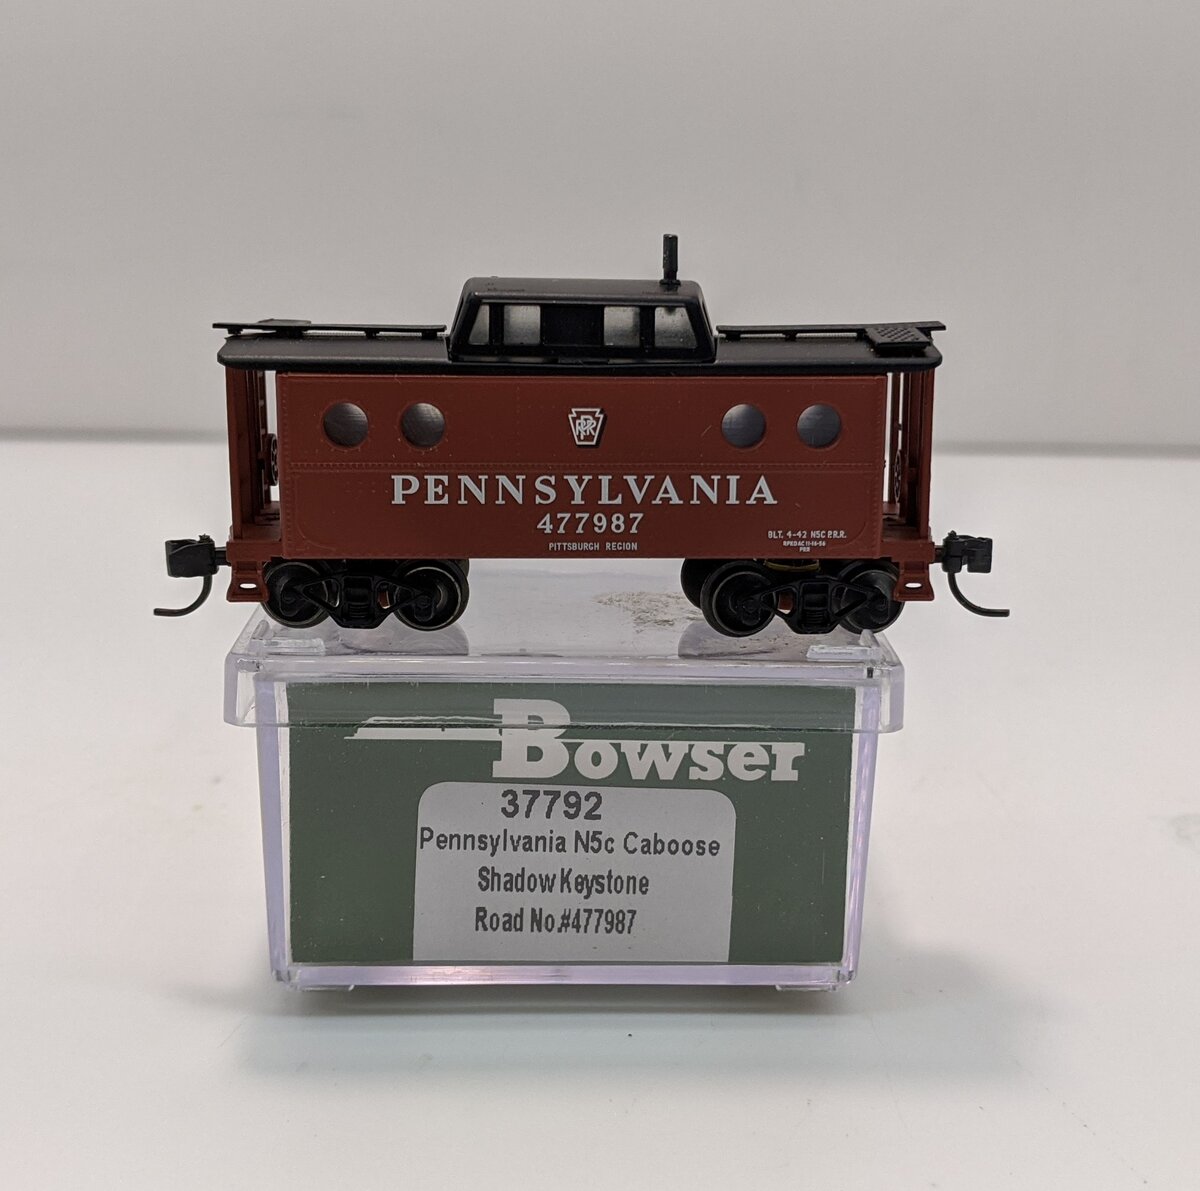 Bowser 37792 N Pennsylvania Railroad N5c Caboose #477987